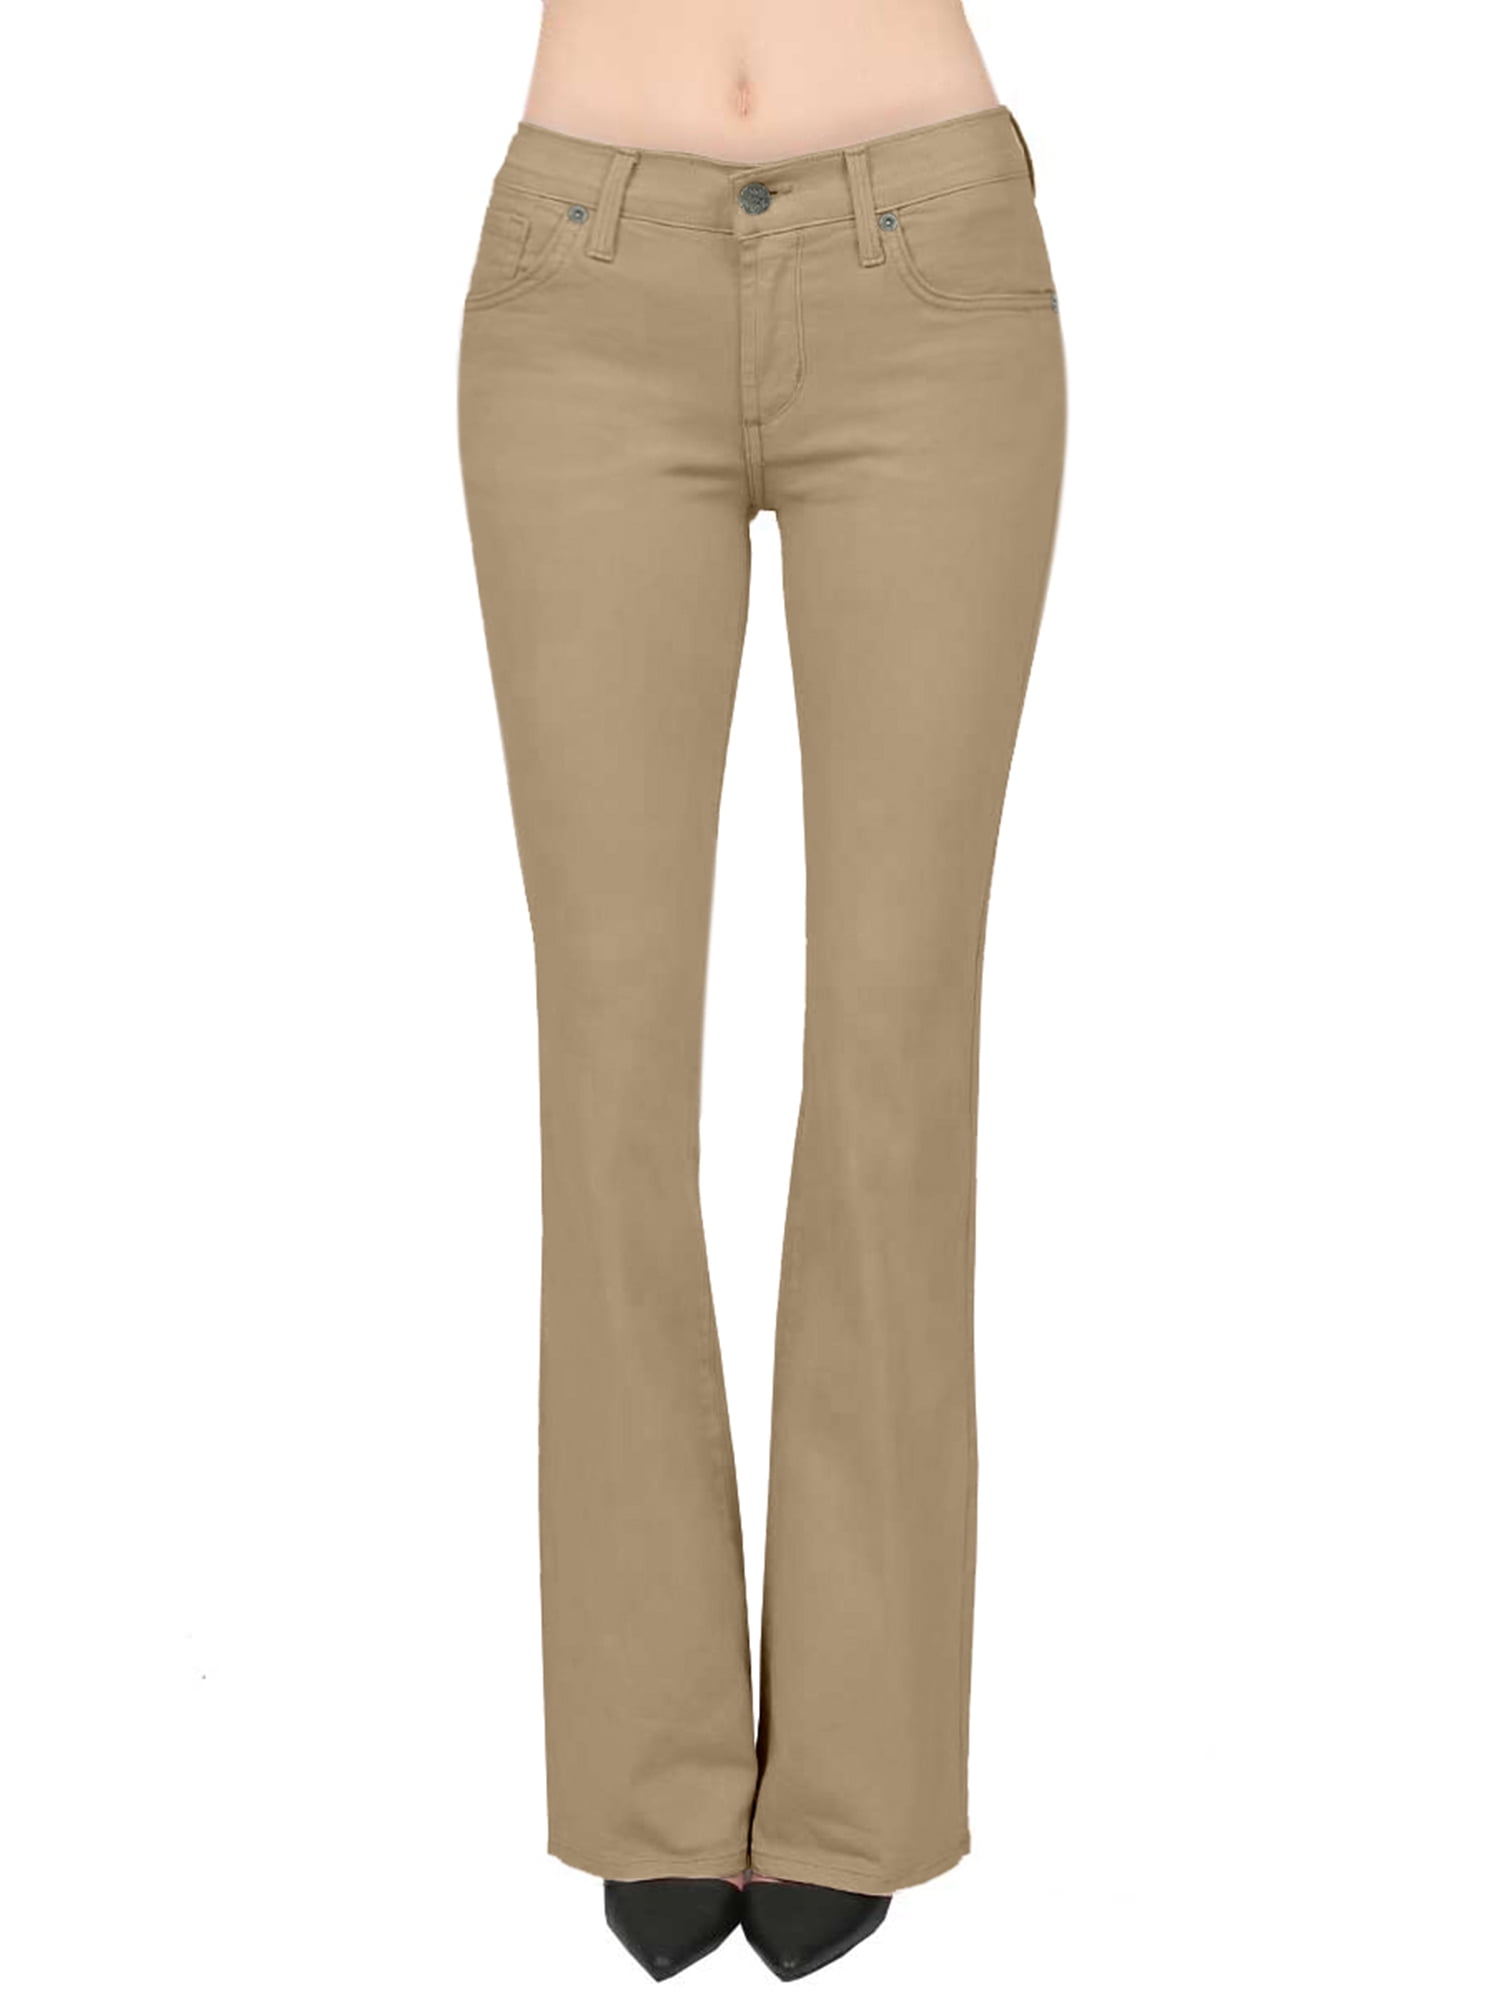 Hybrid & Company Super Comfy Stretch Women 5 Pockets Corduroy Skinny Pants